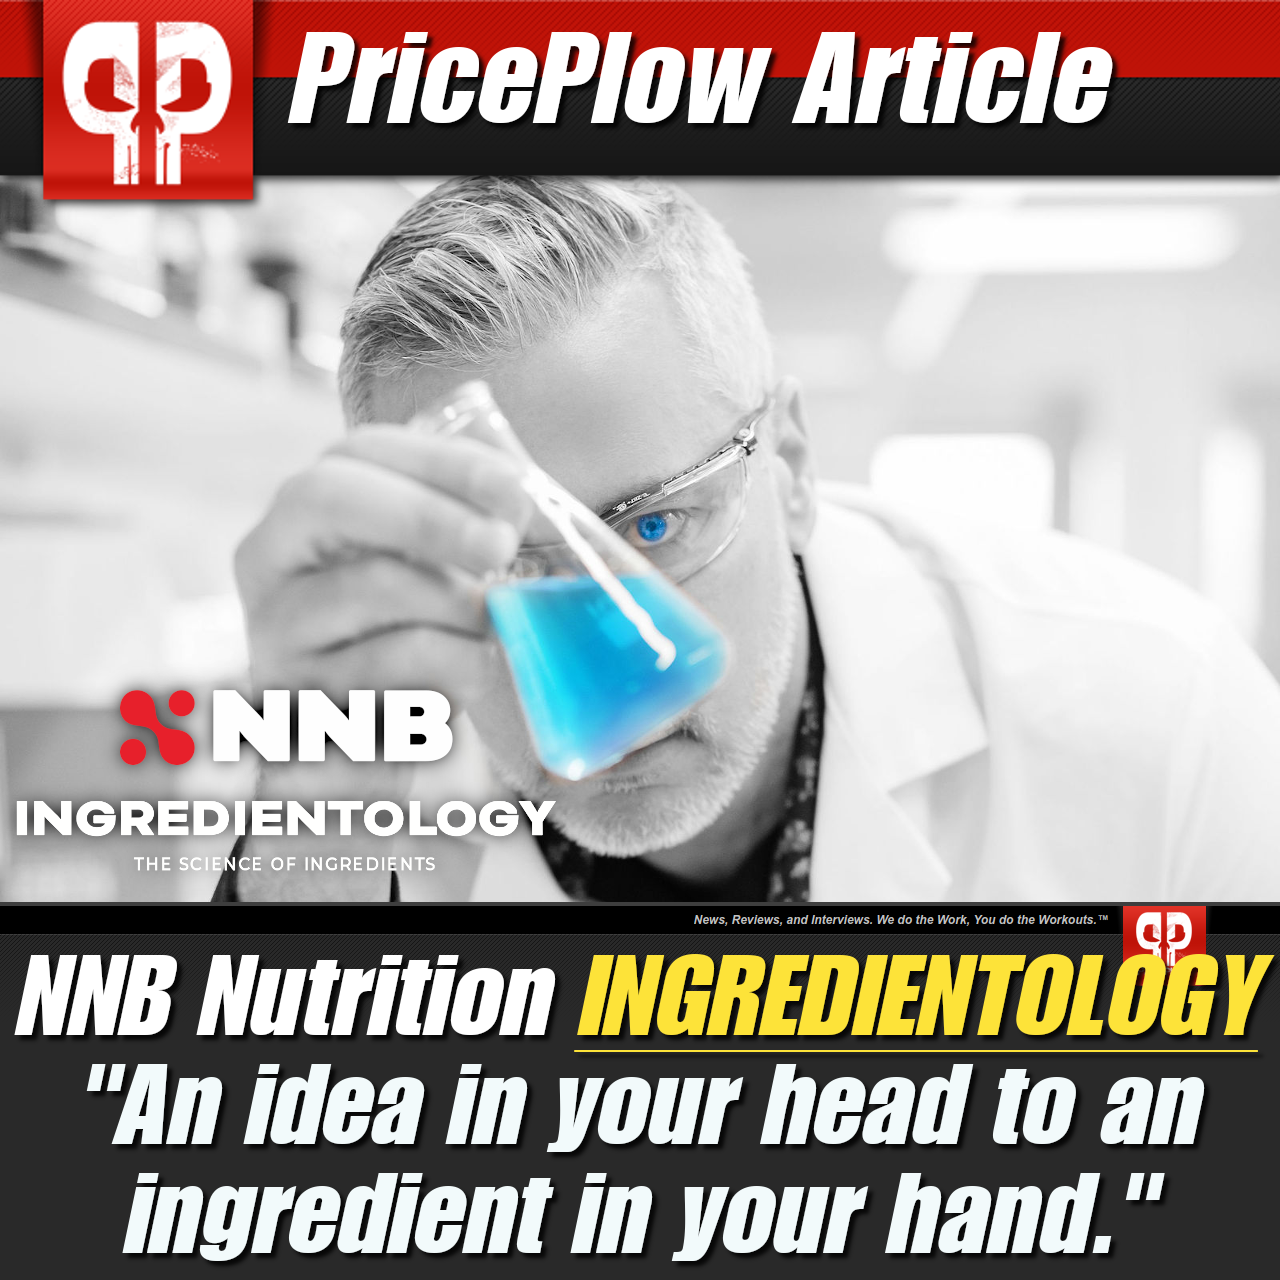 NNB Nutrition Ingredientology